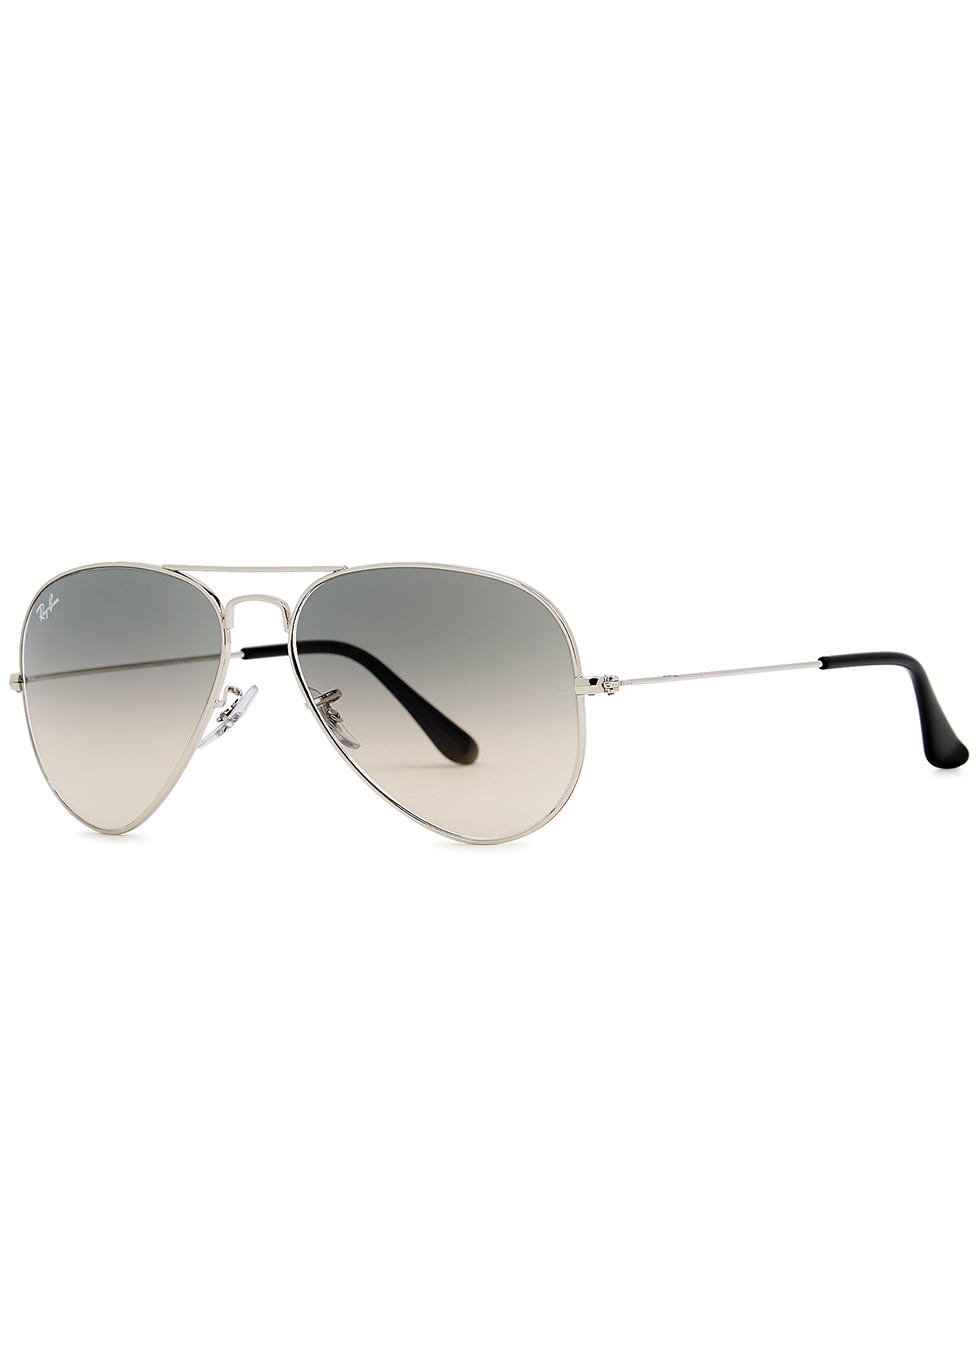 aviator sunglasses by ray ban